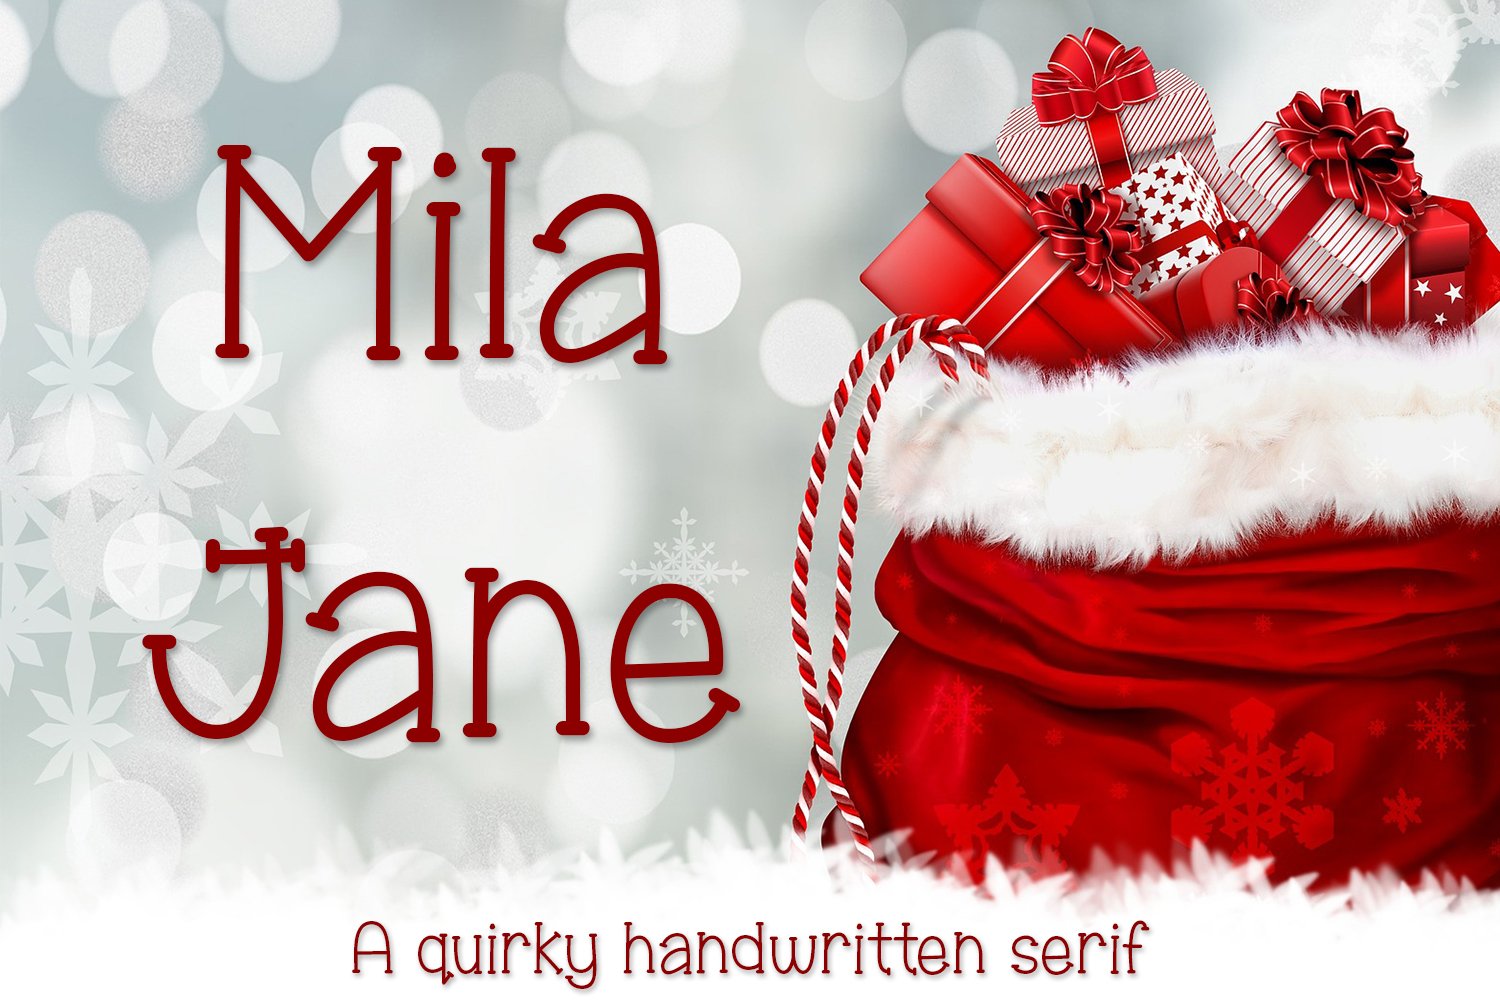 Mila Jane cover image.